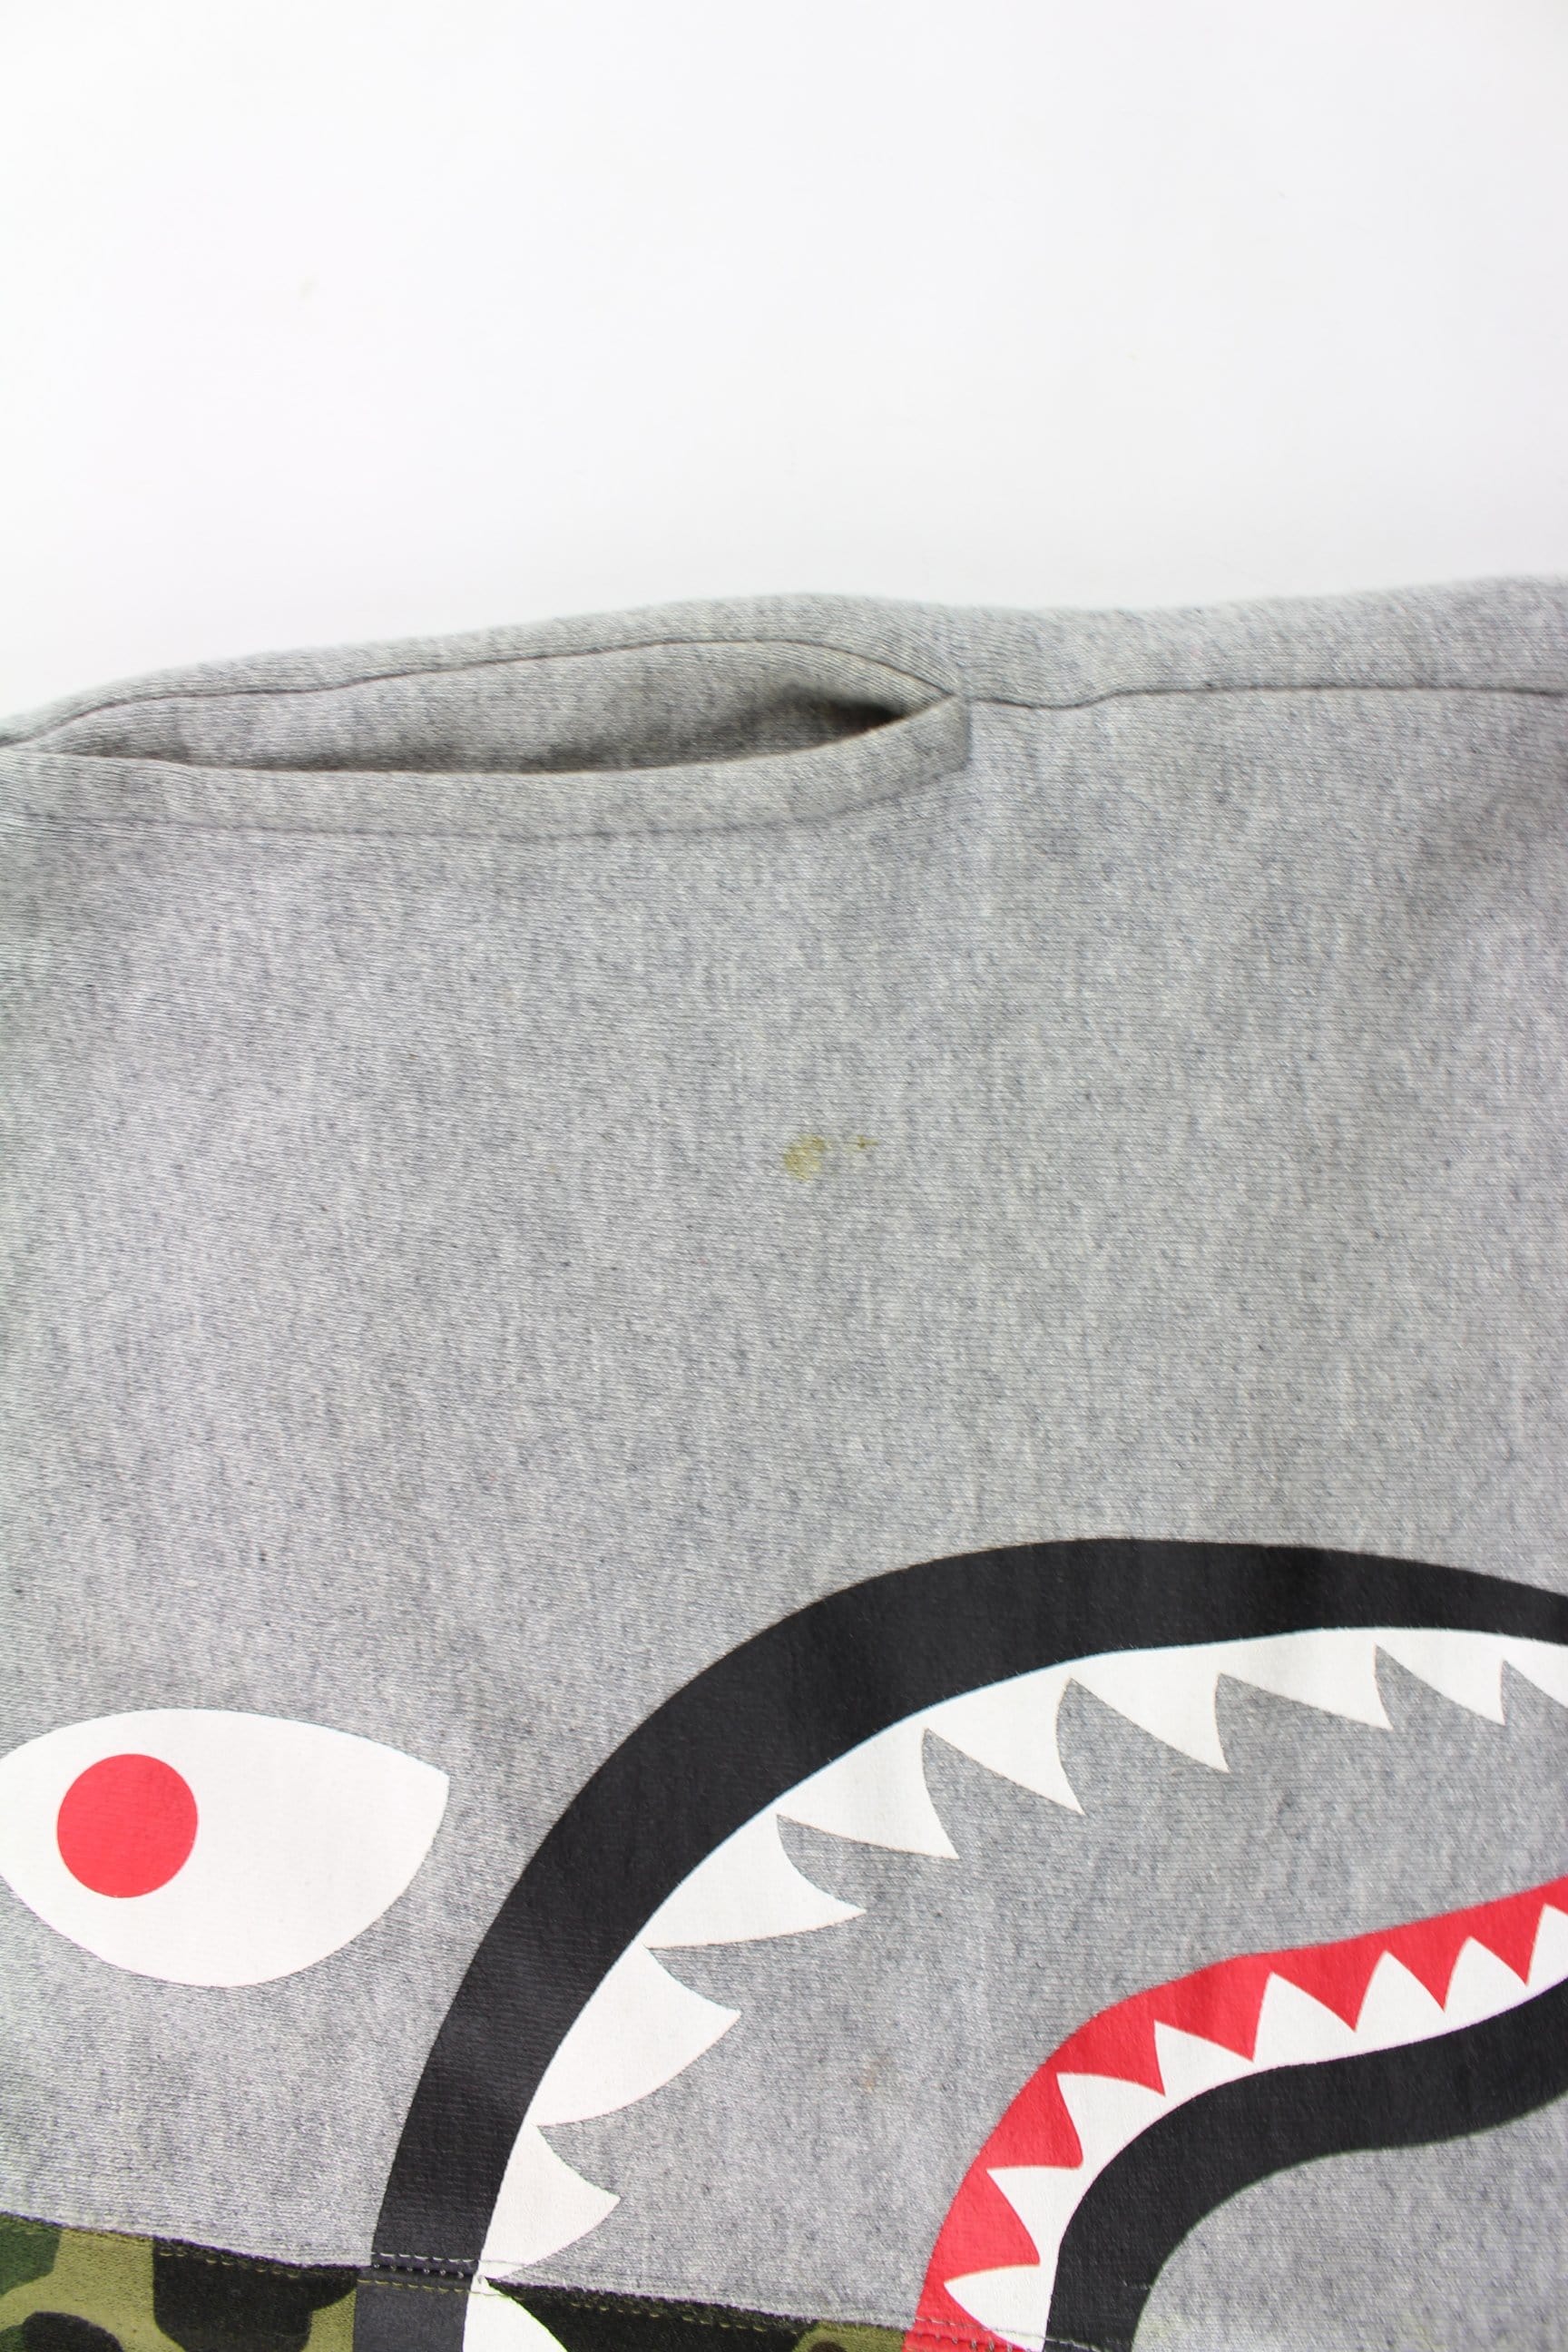 bape grey/1st green camo shark sweatshorts - SaruGeneral